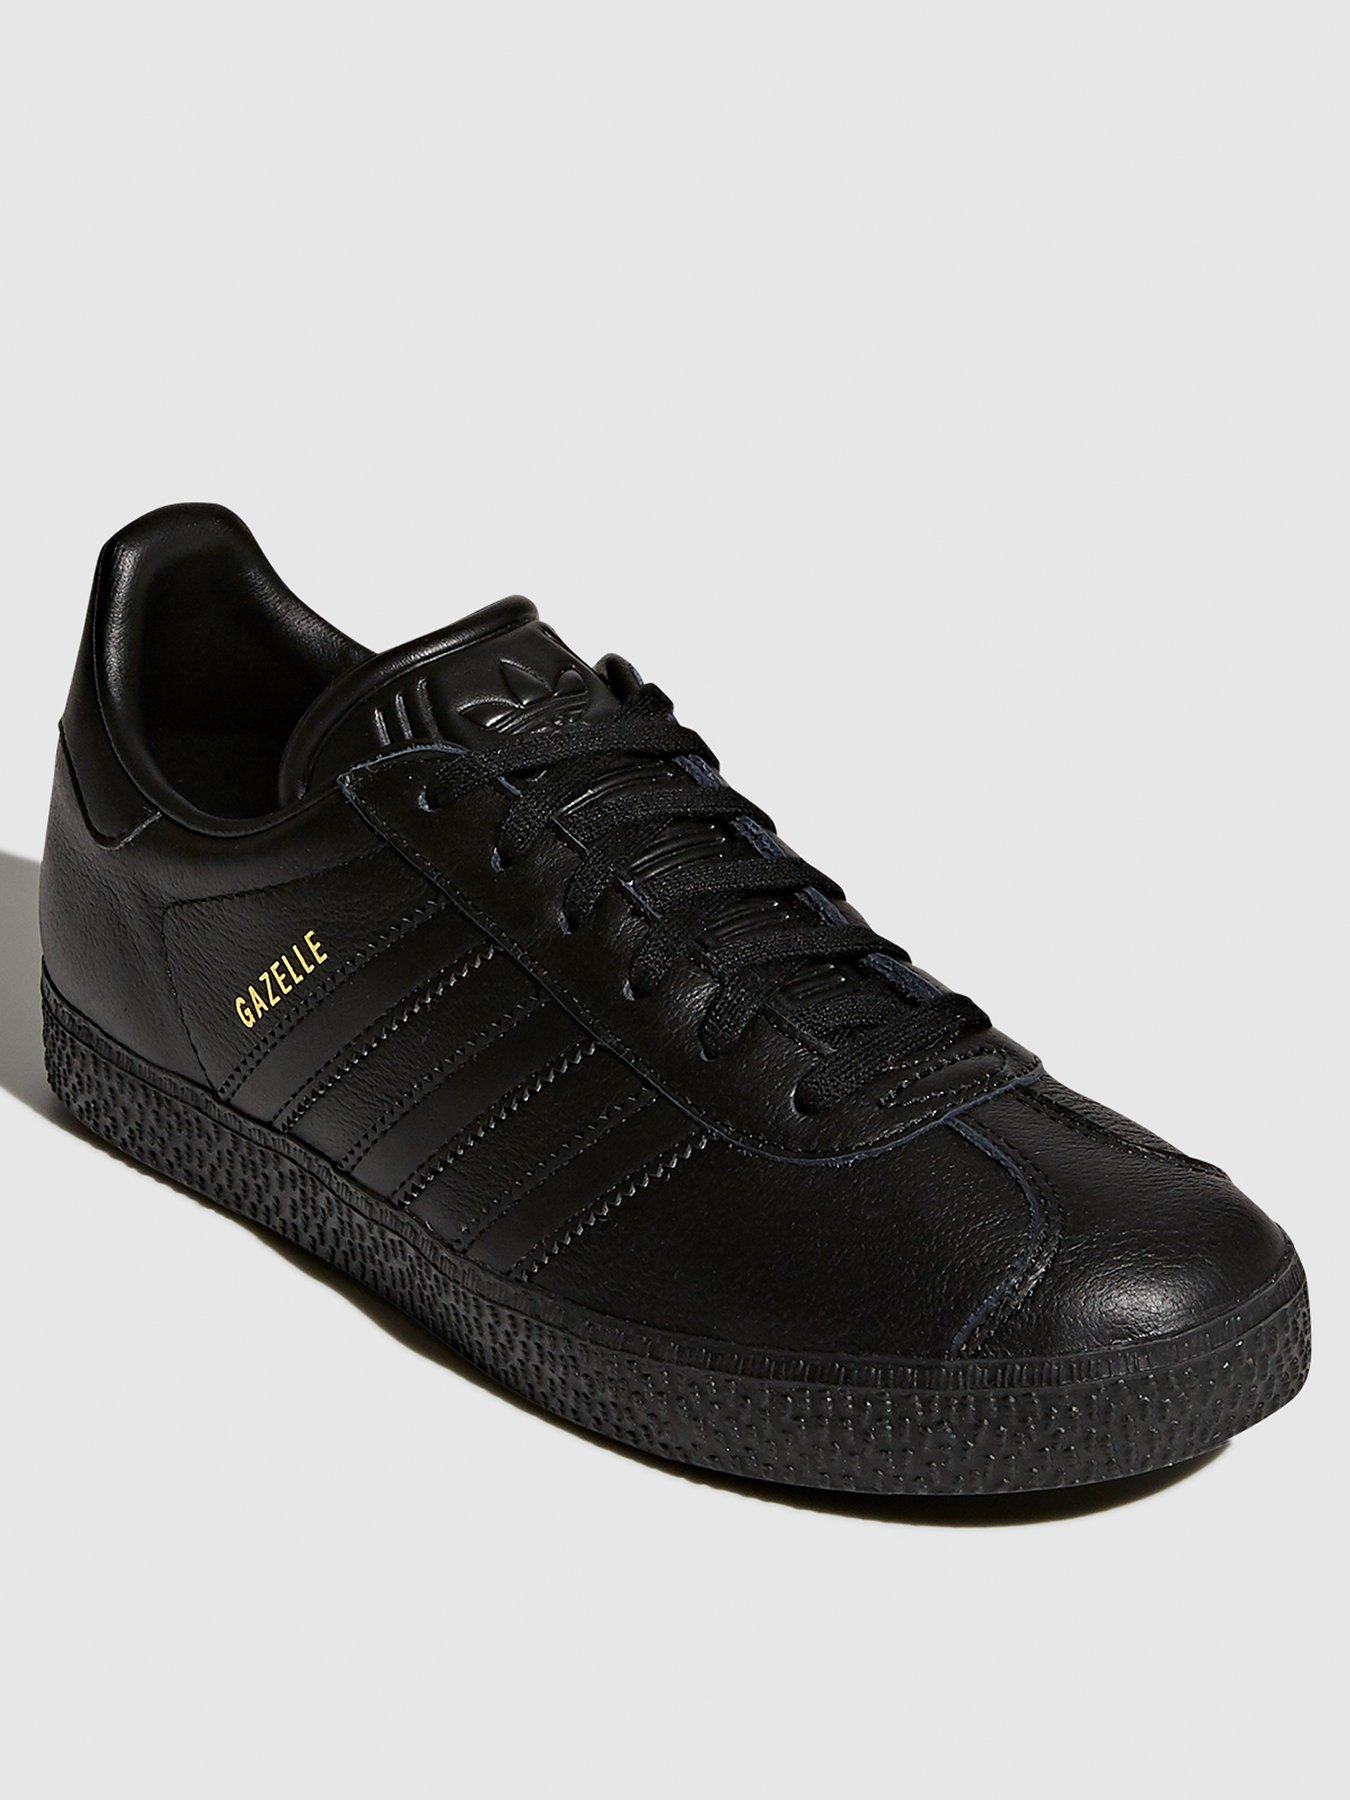 adidas gazelle junior black leather